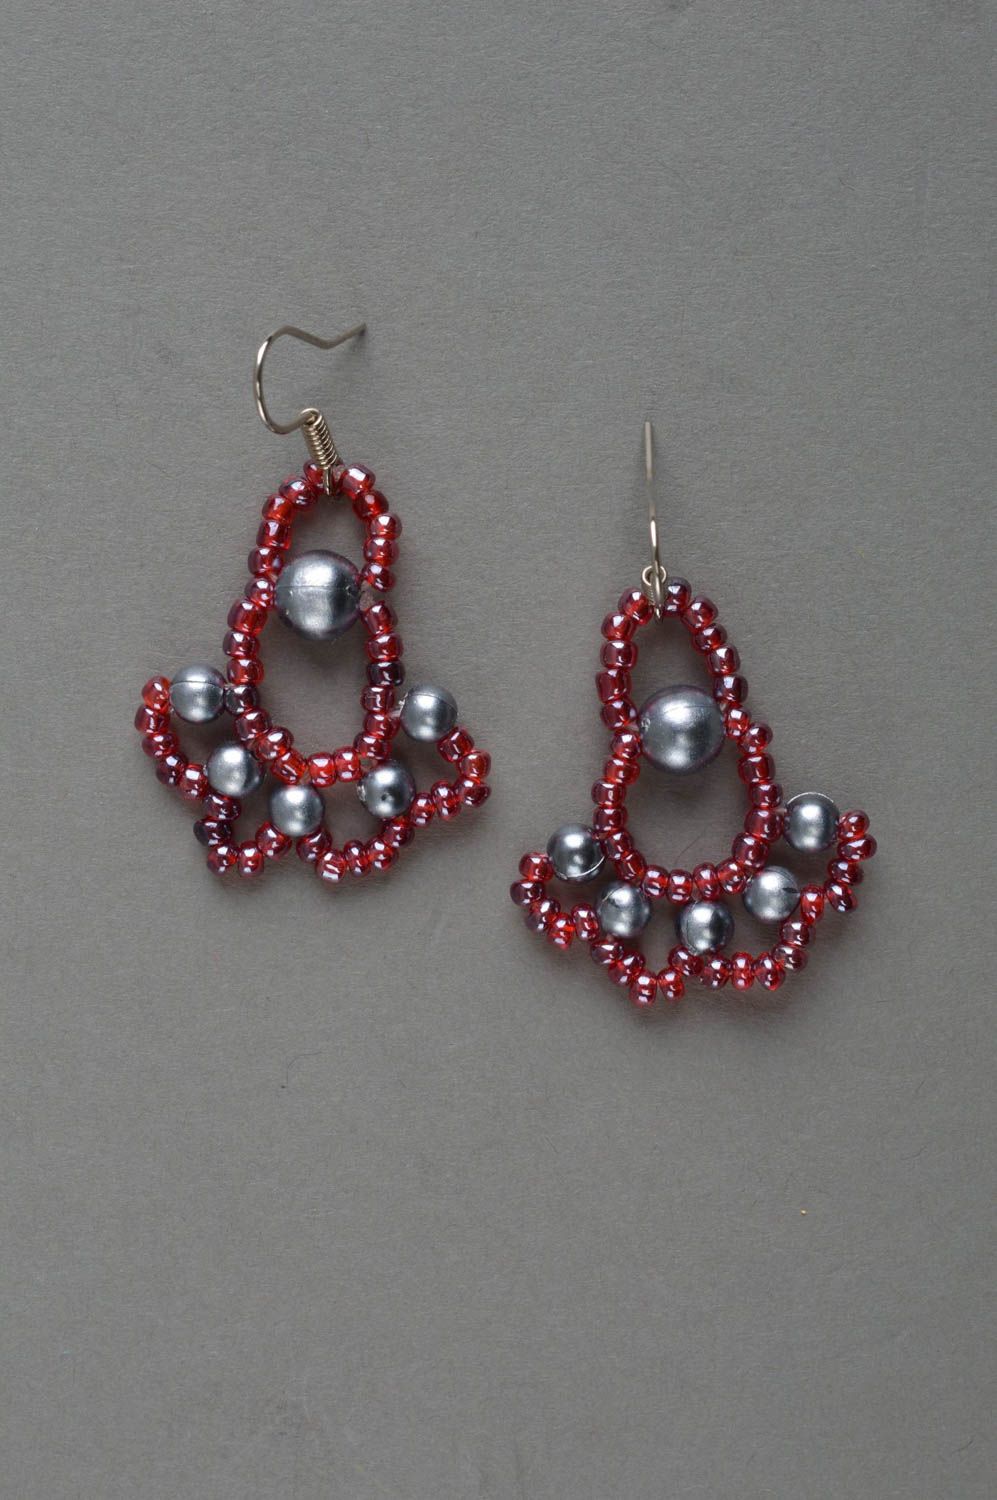 Large homemade beaded earrings evening jewelry designs bead weaving ideas photo 2